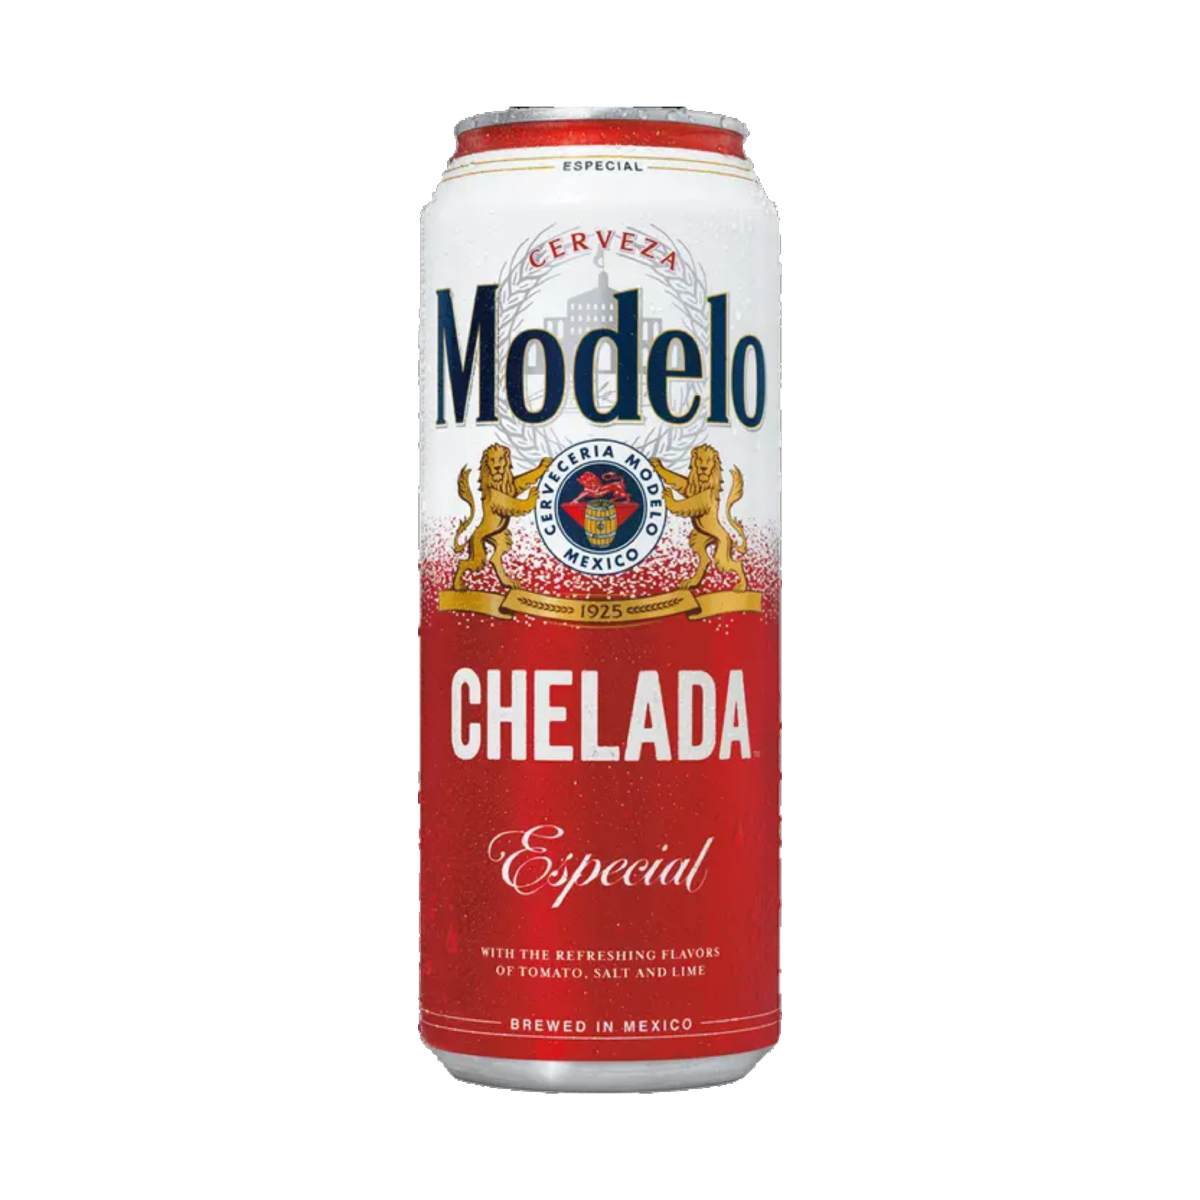 Chelada Especial